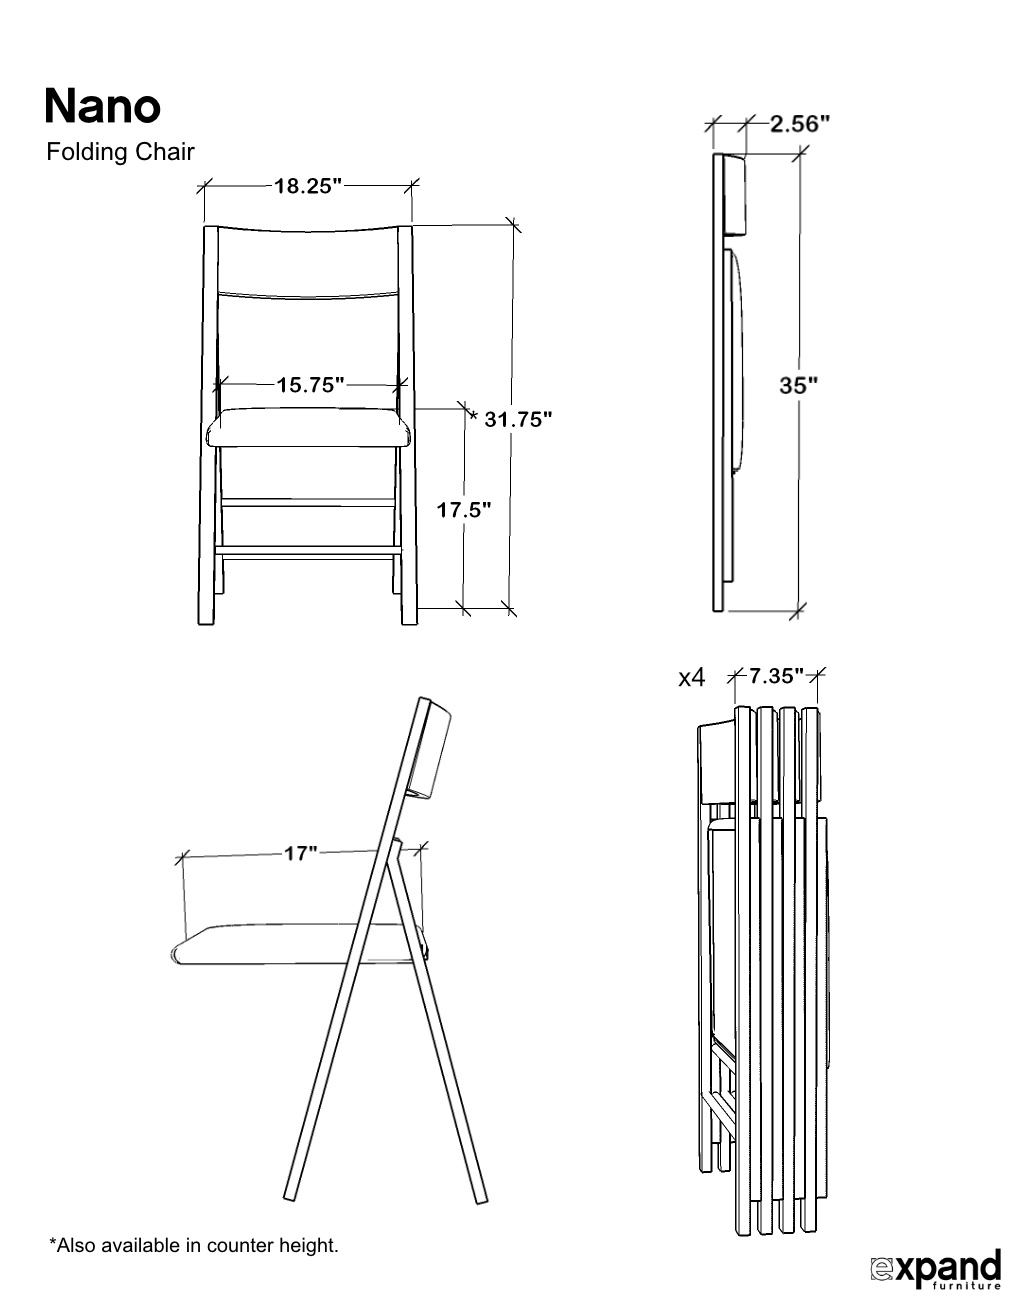 thin folding chairs